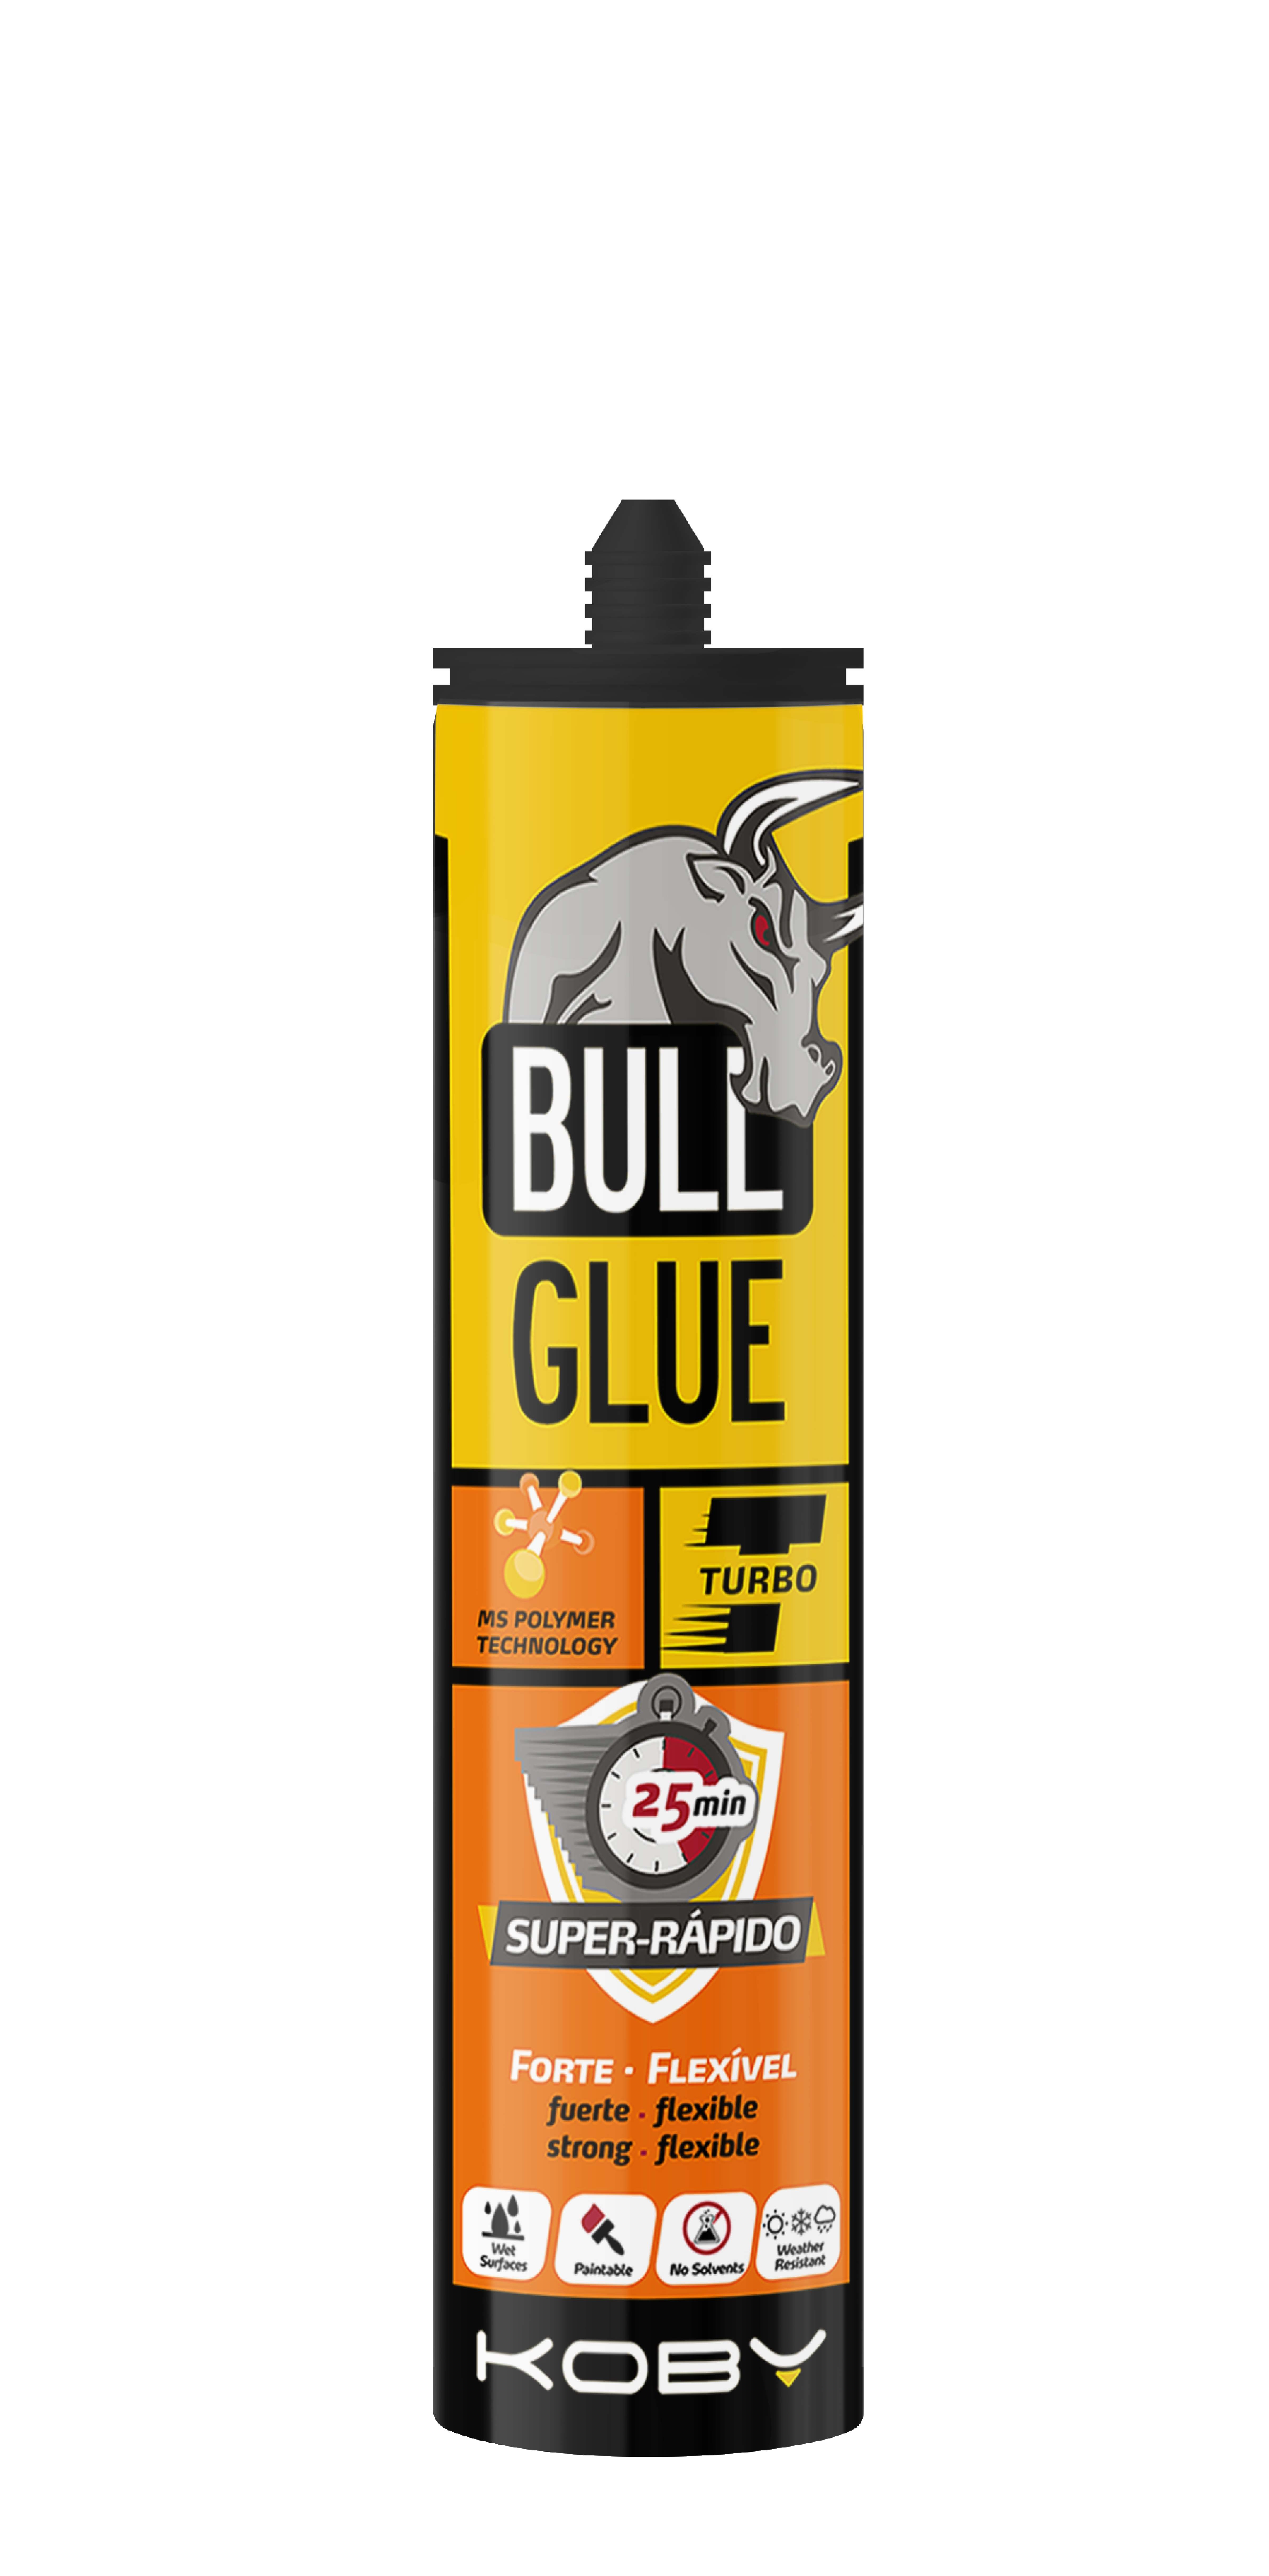 Bull Glue Turbo